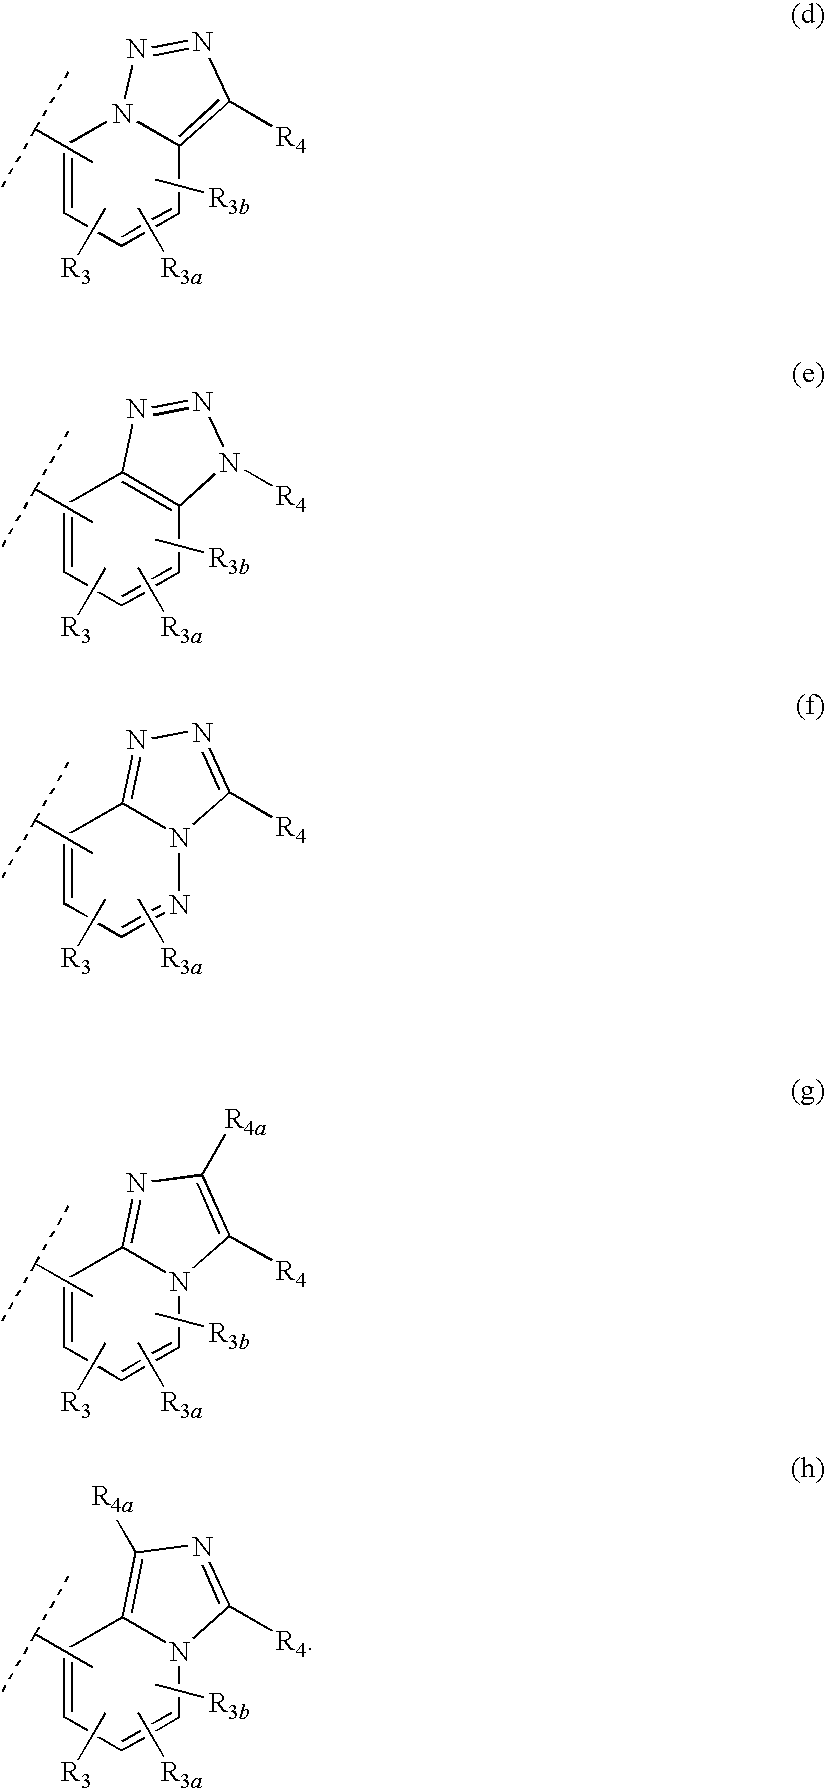 Heteroaryl 11-beta-hydroxysteroid dehydrogenase type I inhibitors